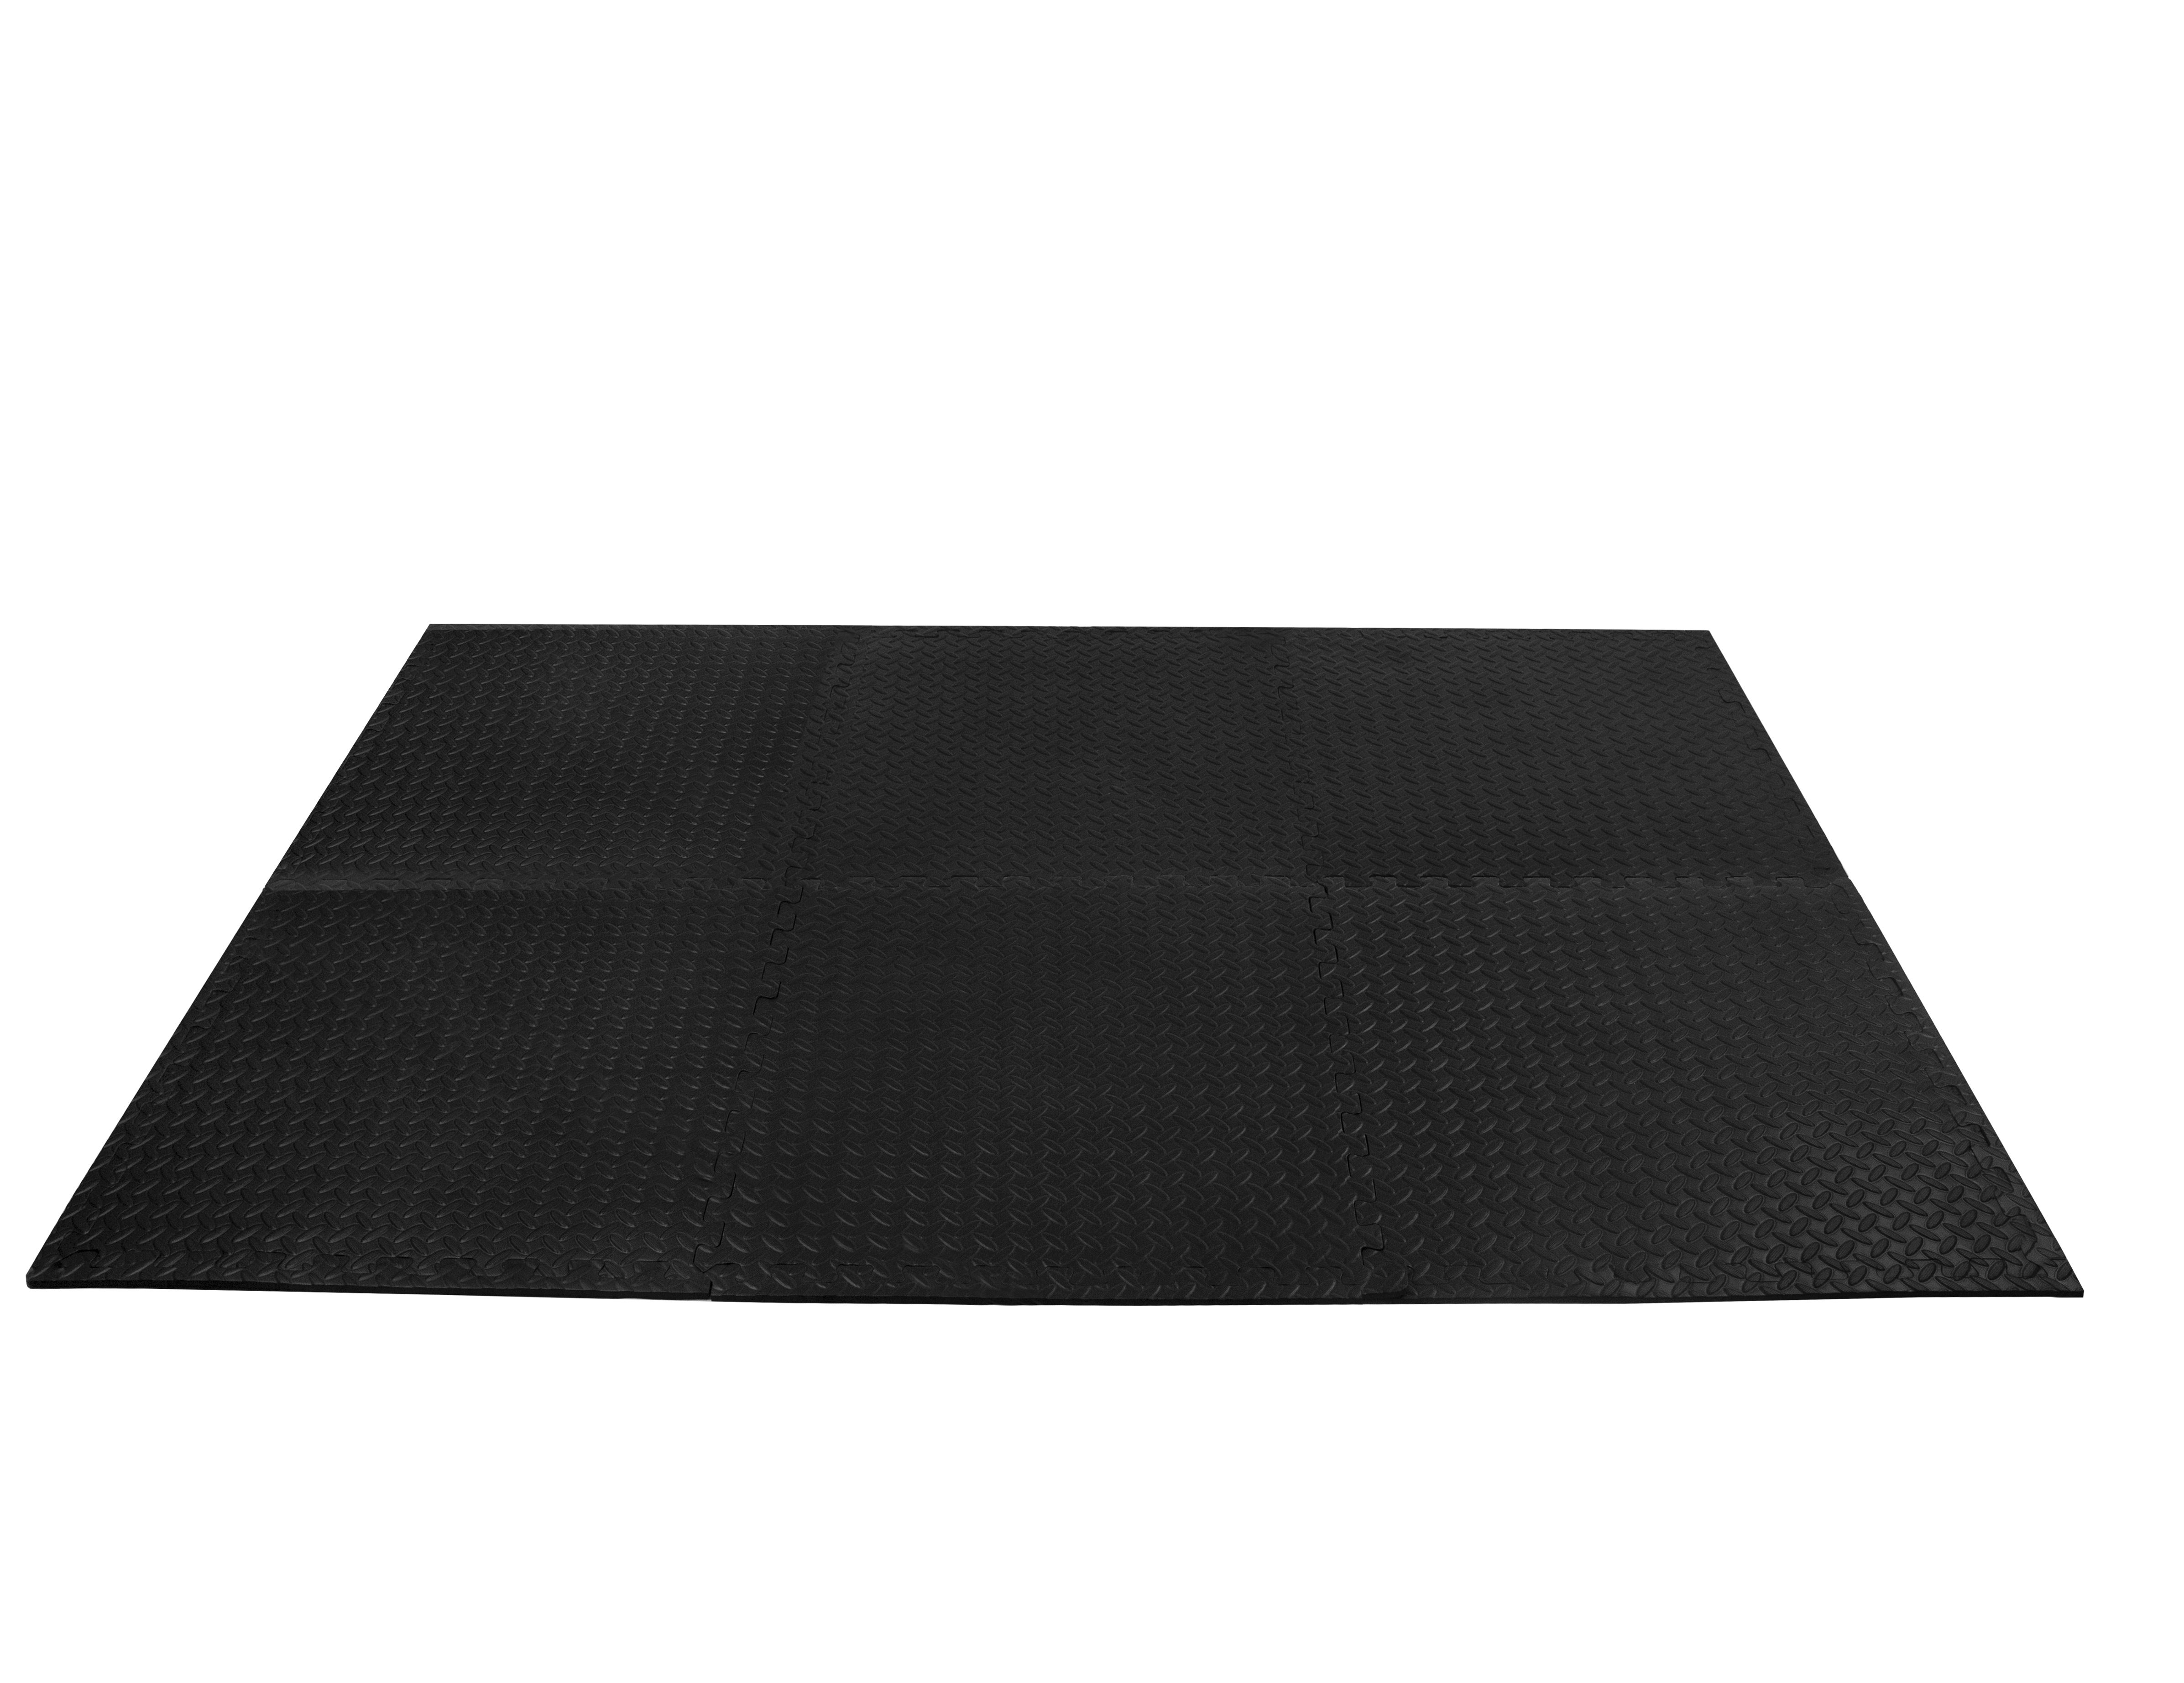 Auto Pro Black Interlocking floor tile 2.16m², Pack of 6